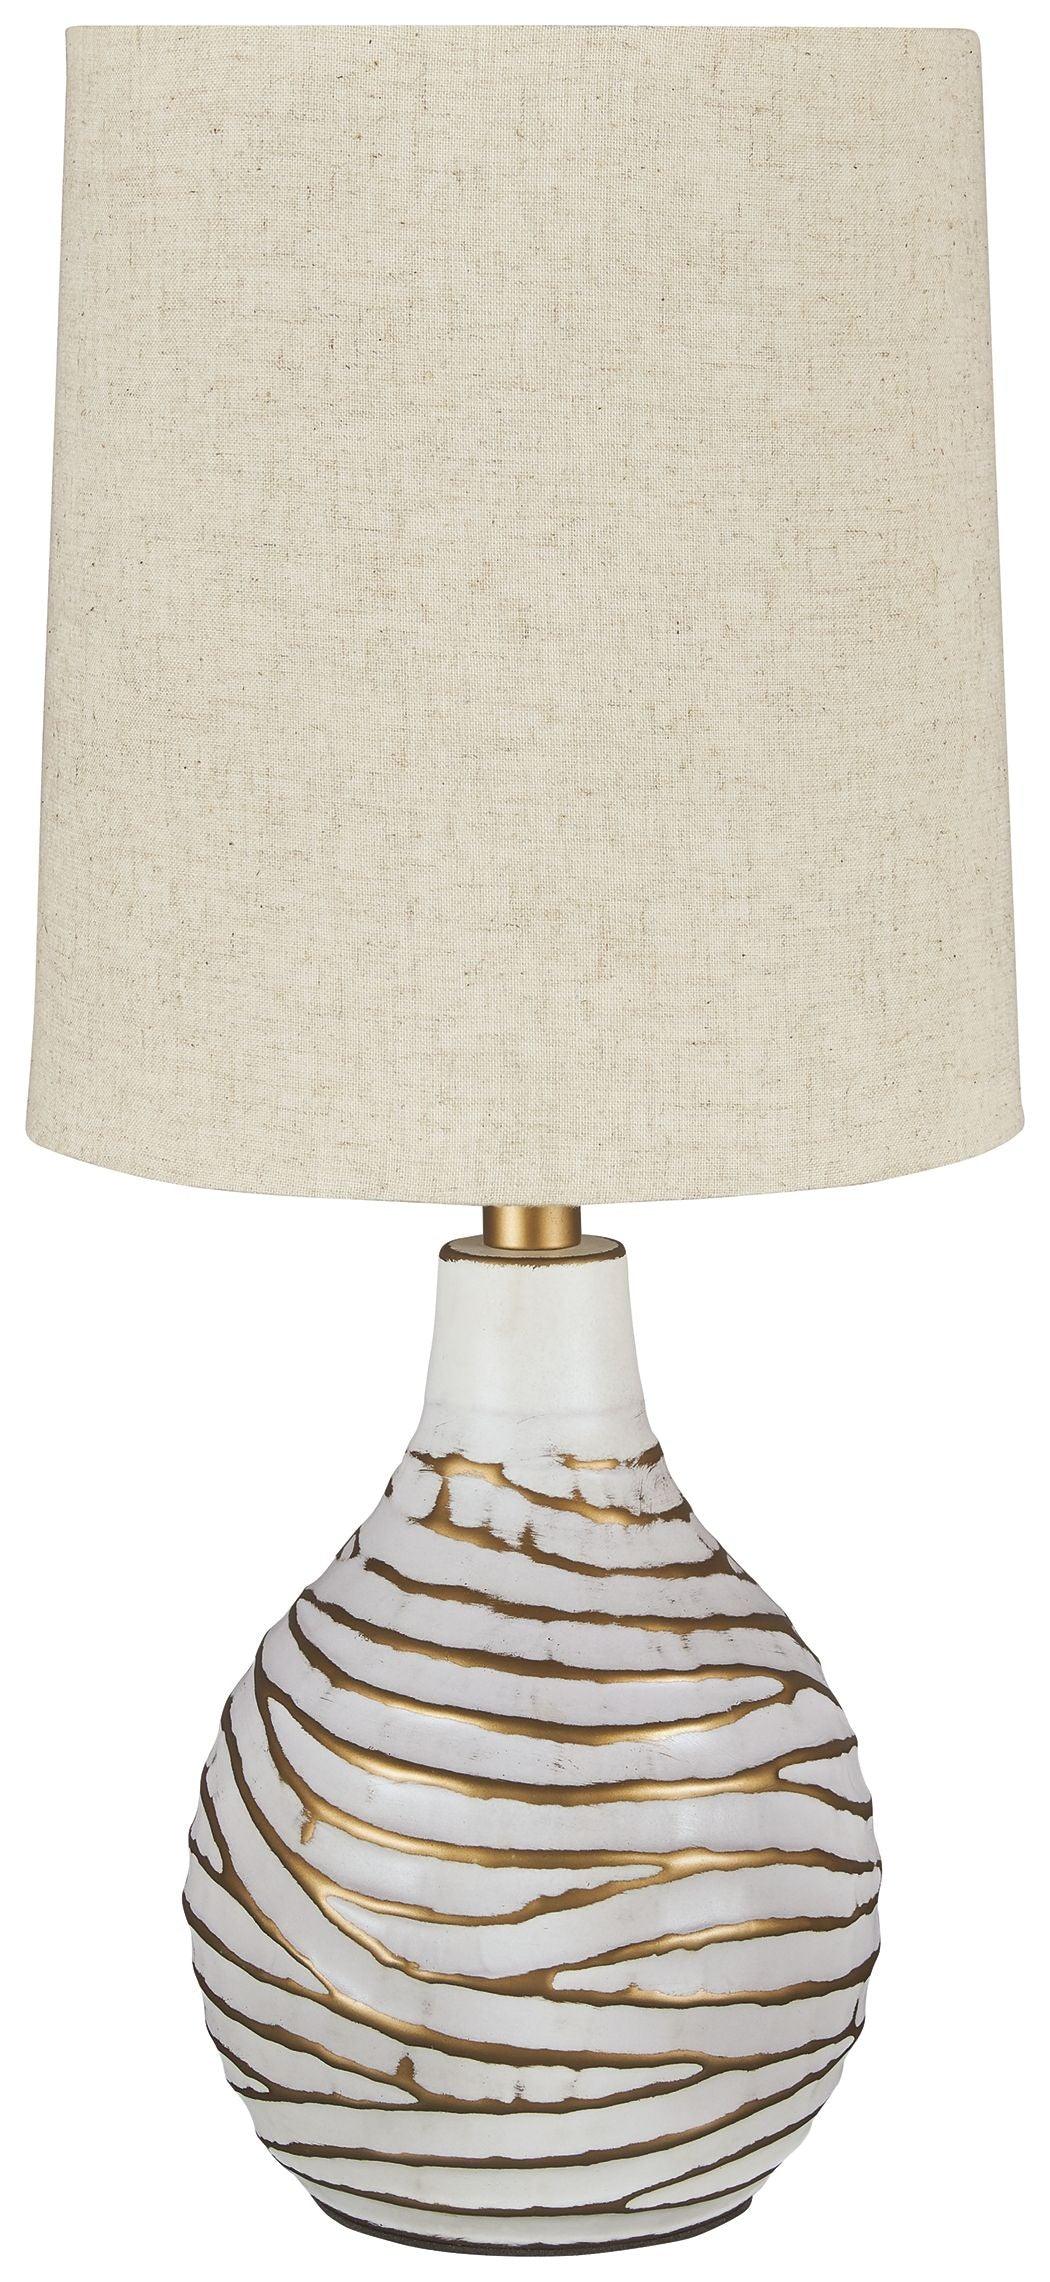 Ashley Furniture - Aleela - White / Gold Finish - Metal Table Lamp - 5th Avenue Furniture